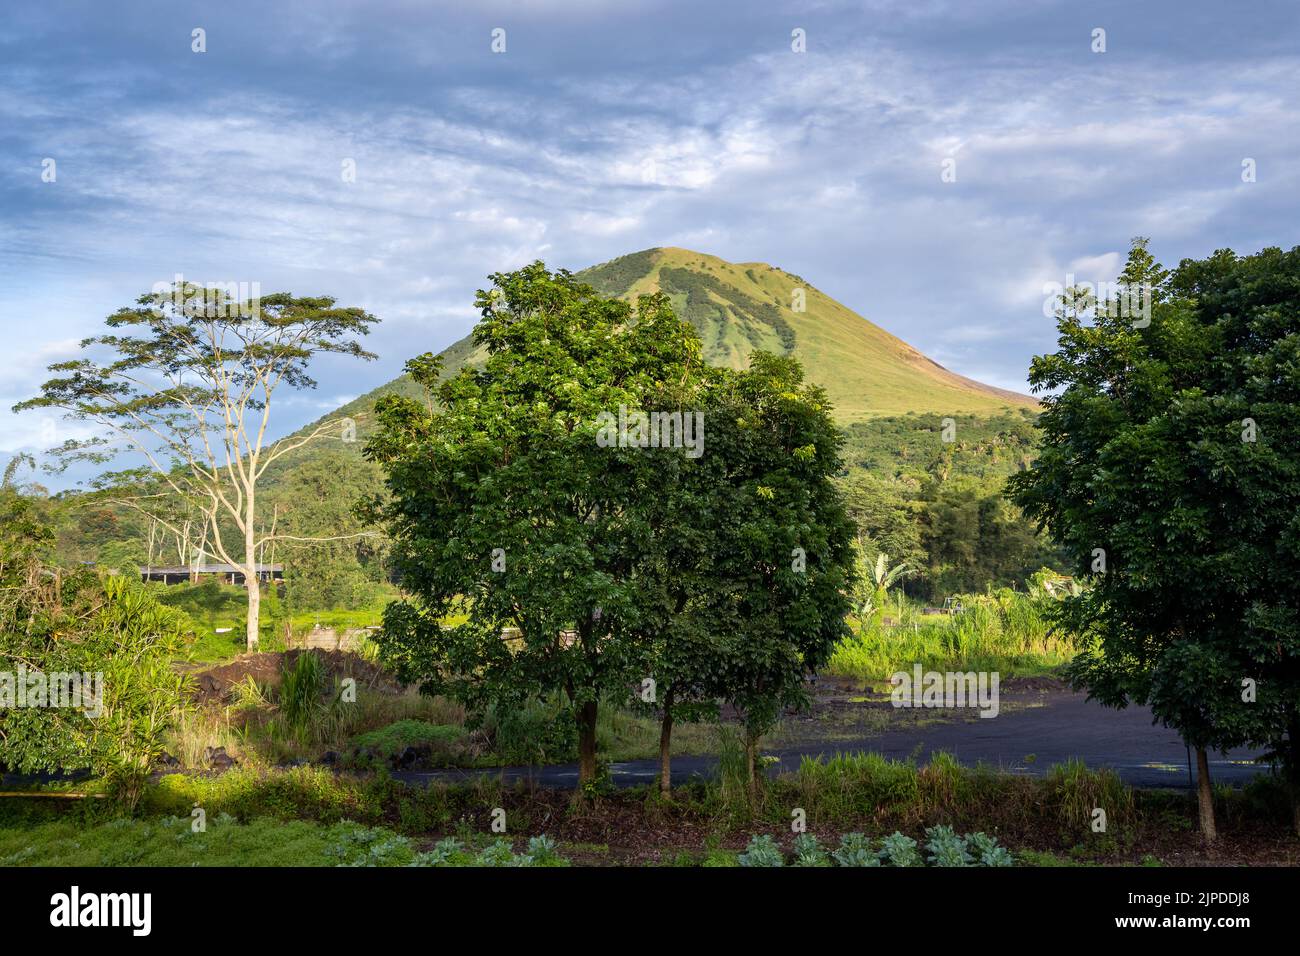 Mount Lokon, or Gunung Lokon, is an active volcano near Tomohon, North Sulawesi, Indonesia. Stock Photo